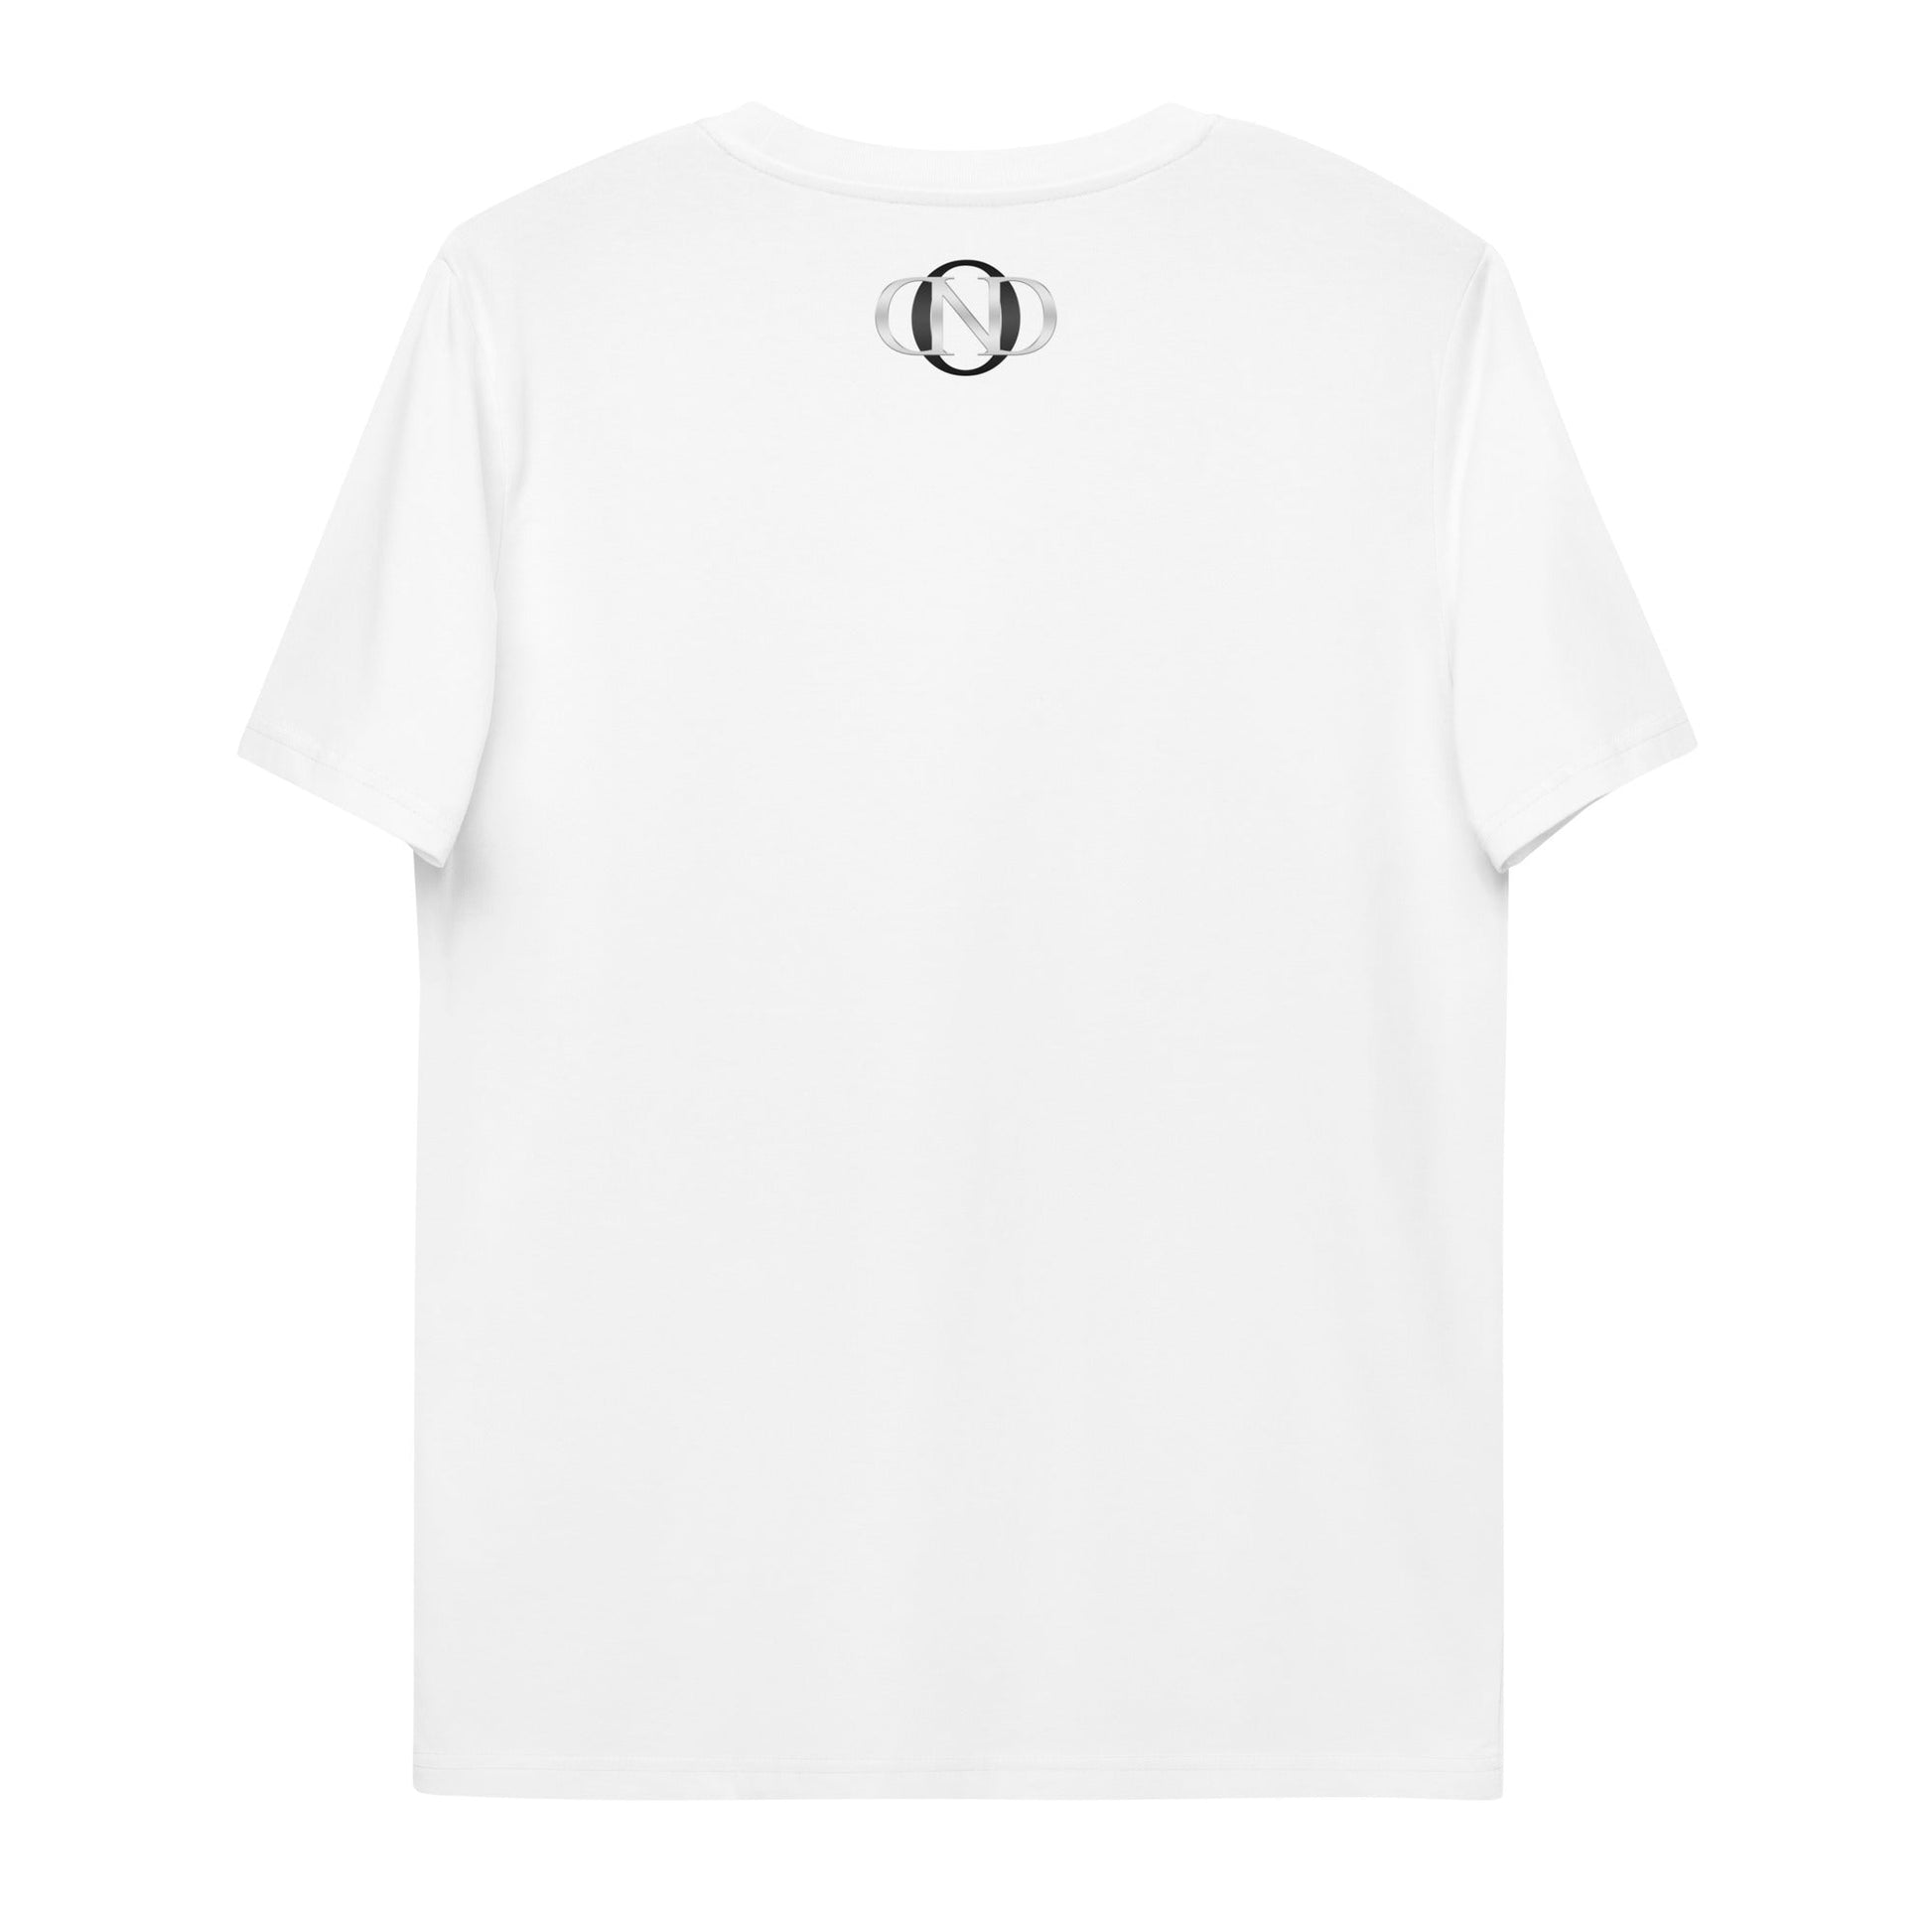 24 Neduz Designs Unisex Socialliberalerna Framtid T-Shirt -